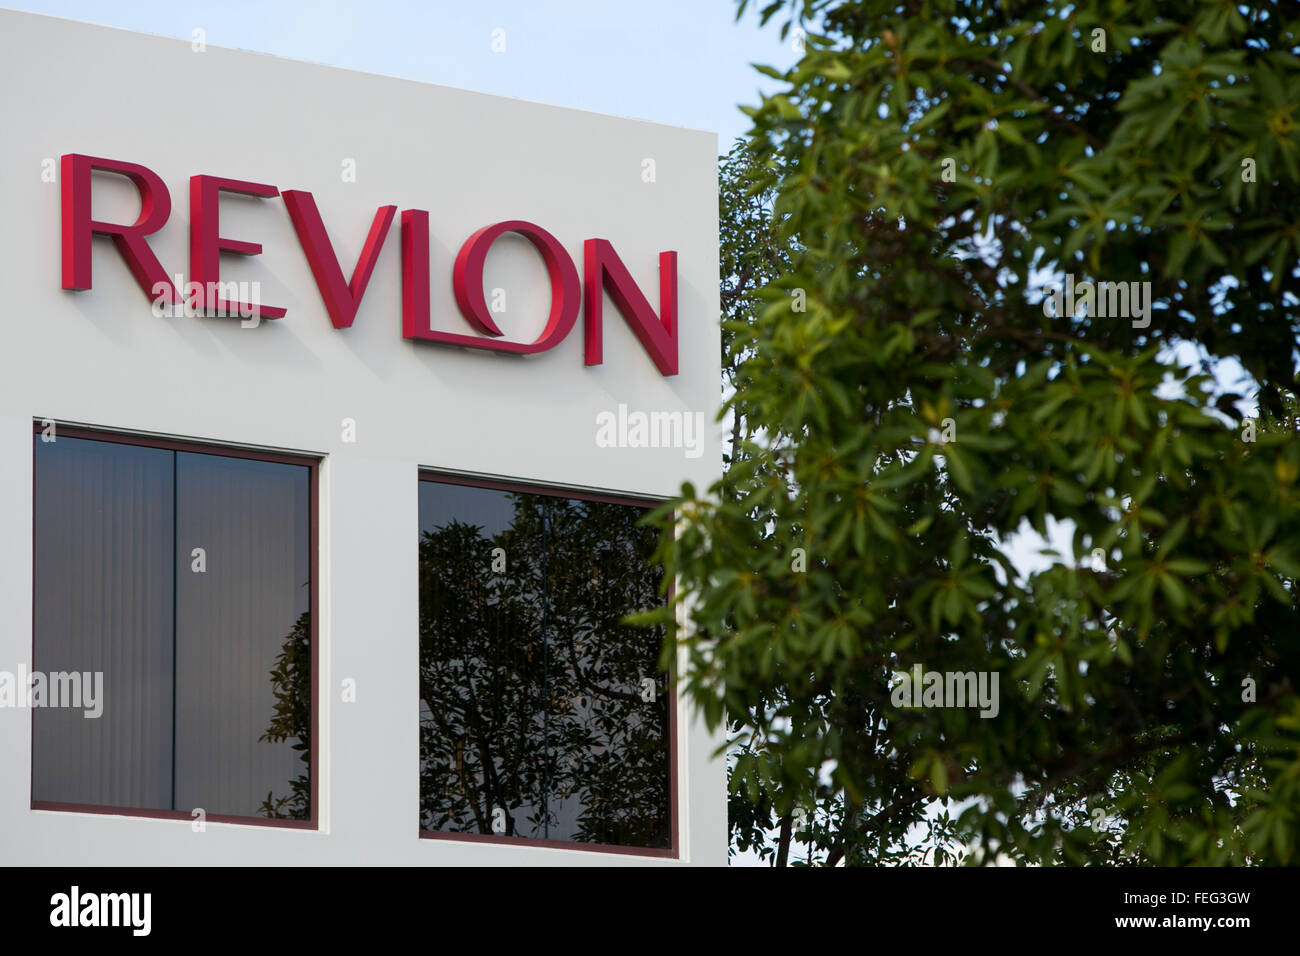 BuyMeBeauty Exclusives: Revlon Age Defying Foundation - BuyMeBeauty.com